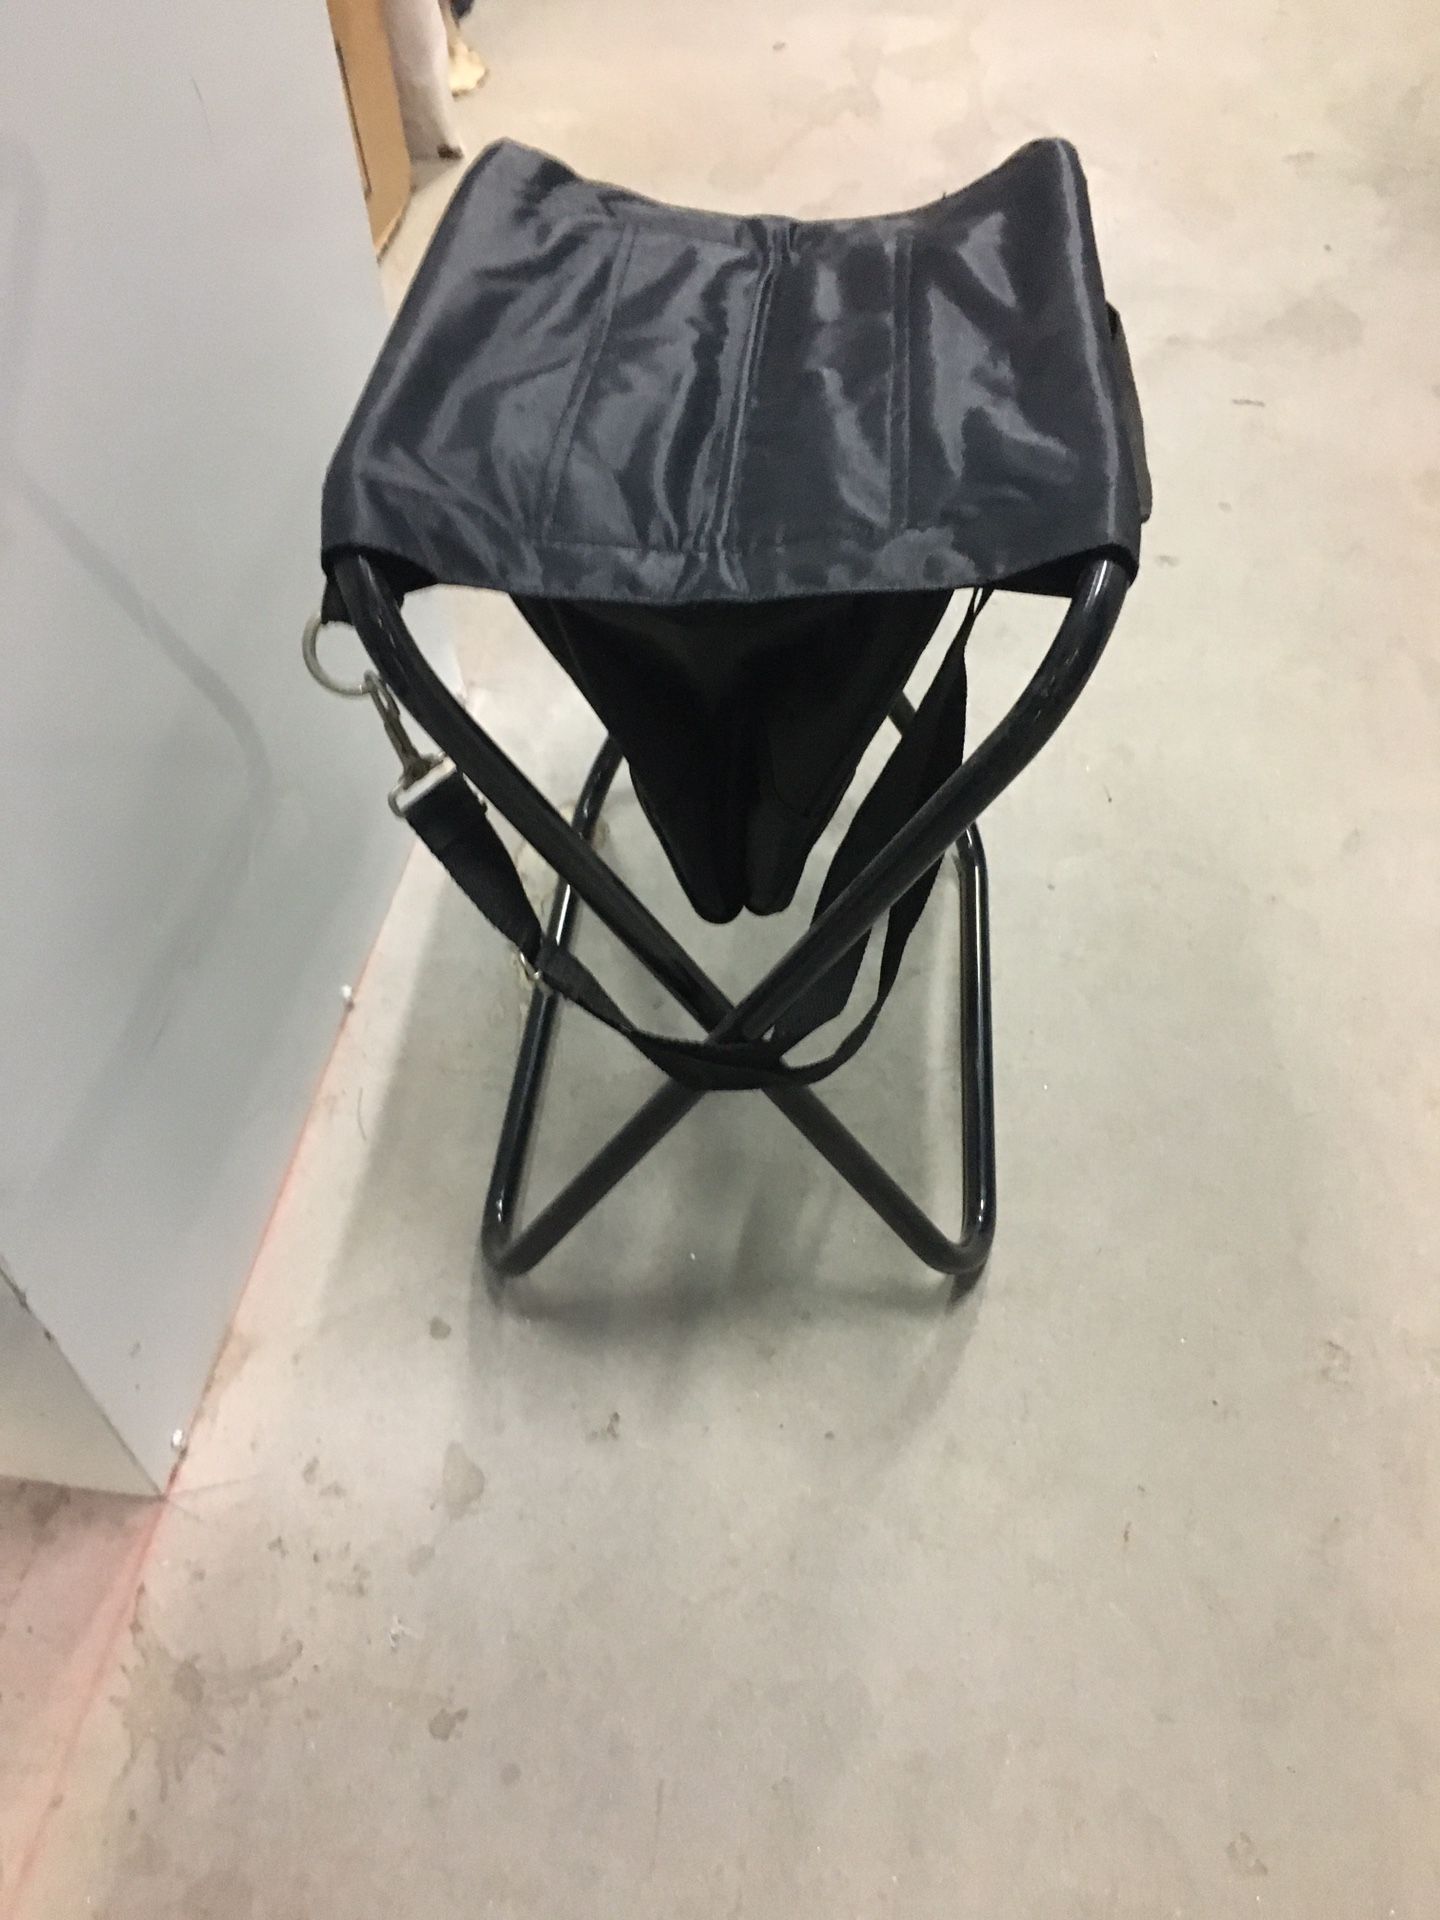 Folding Sporting/Fishing stool with storage bag.